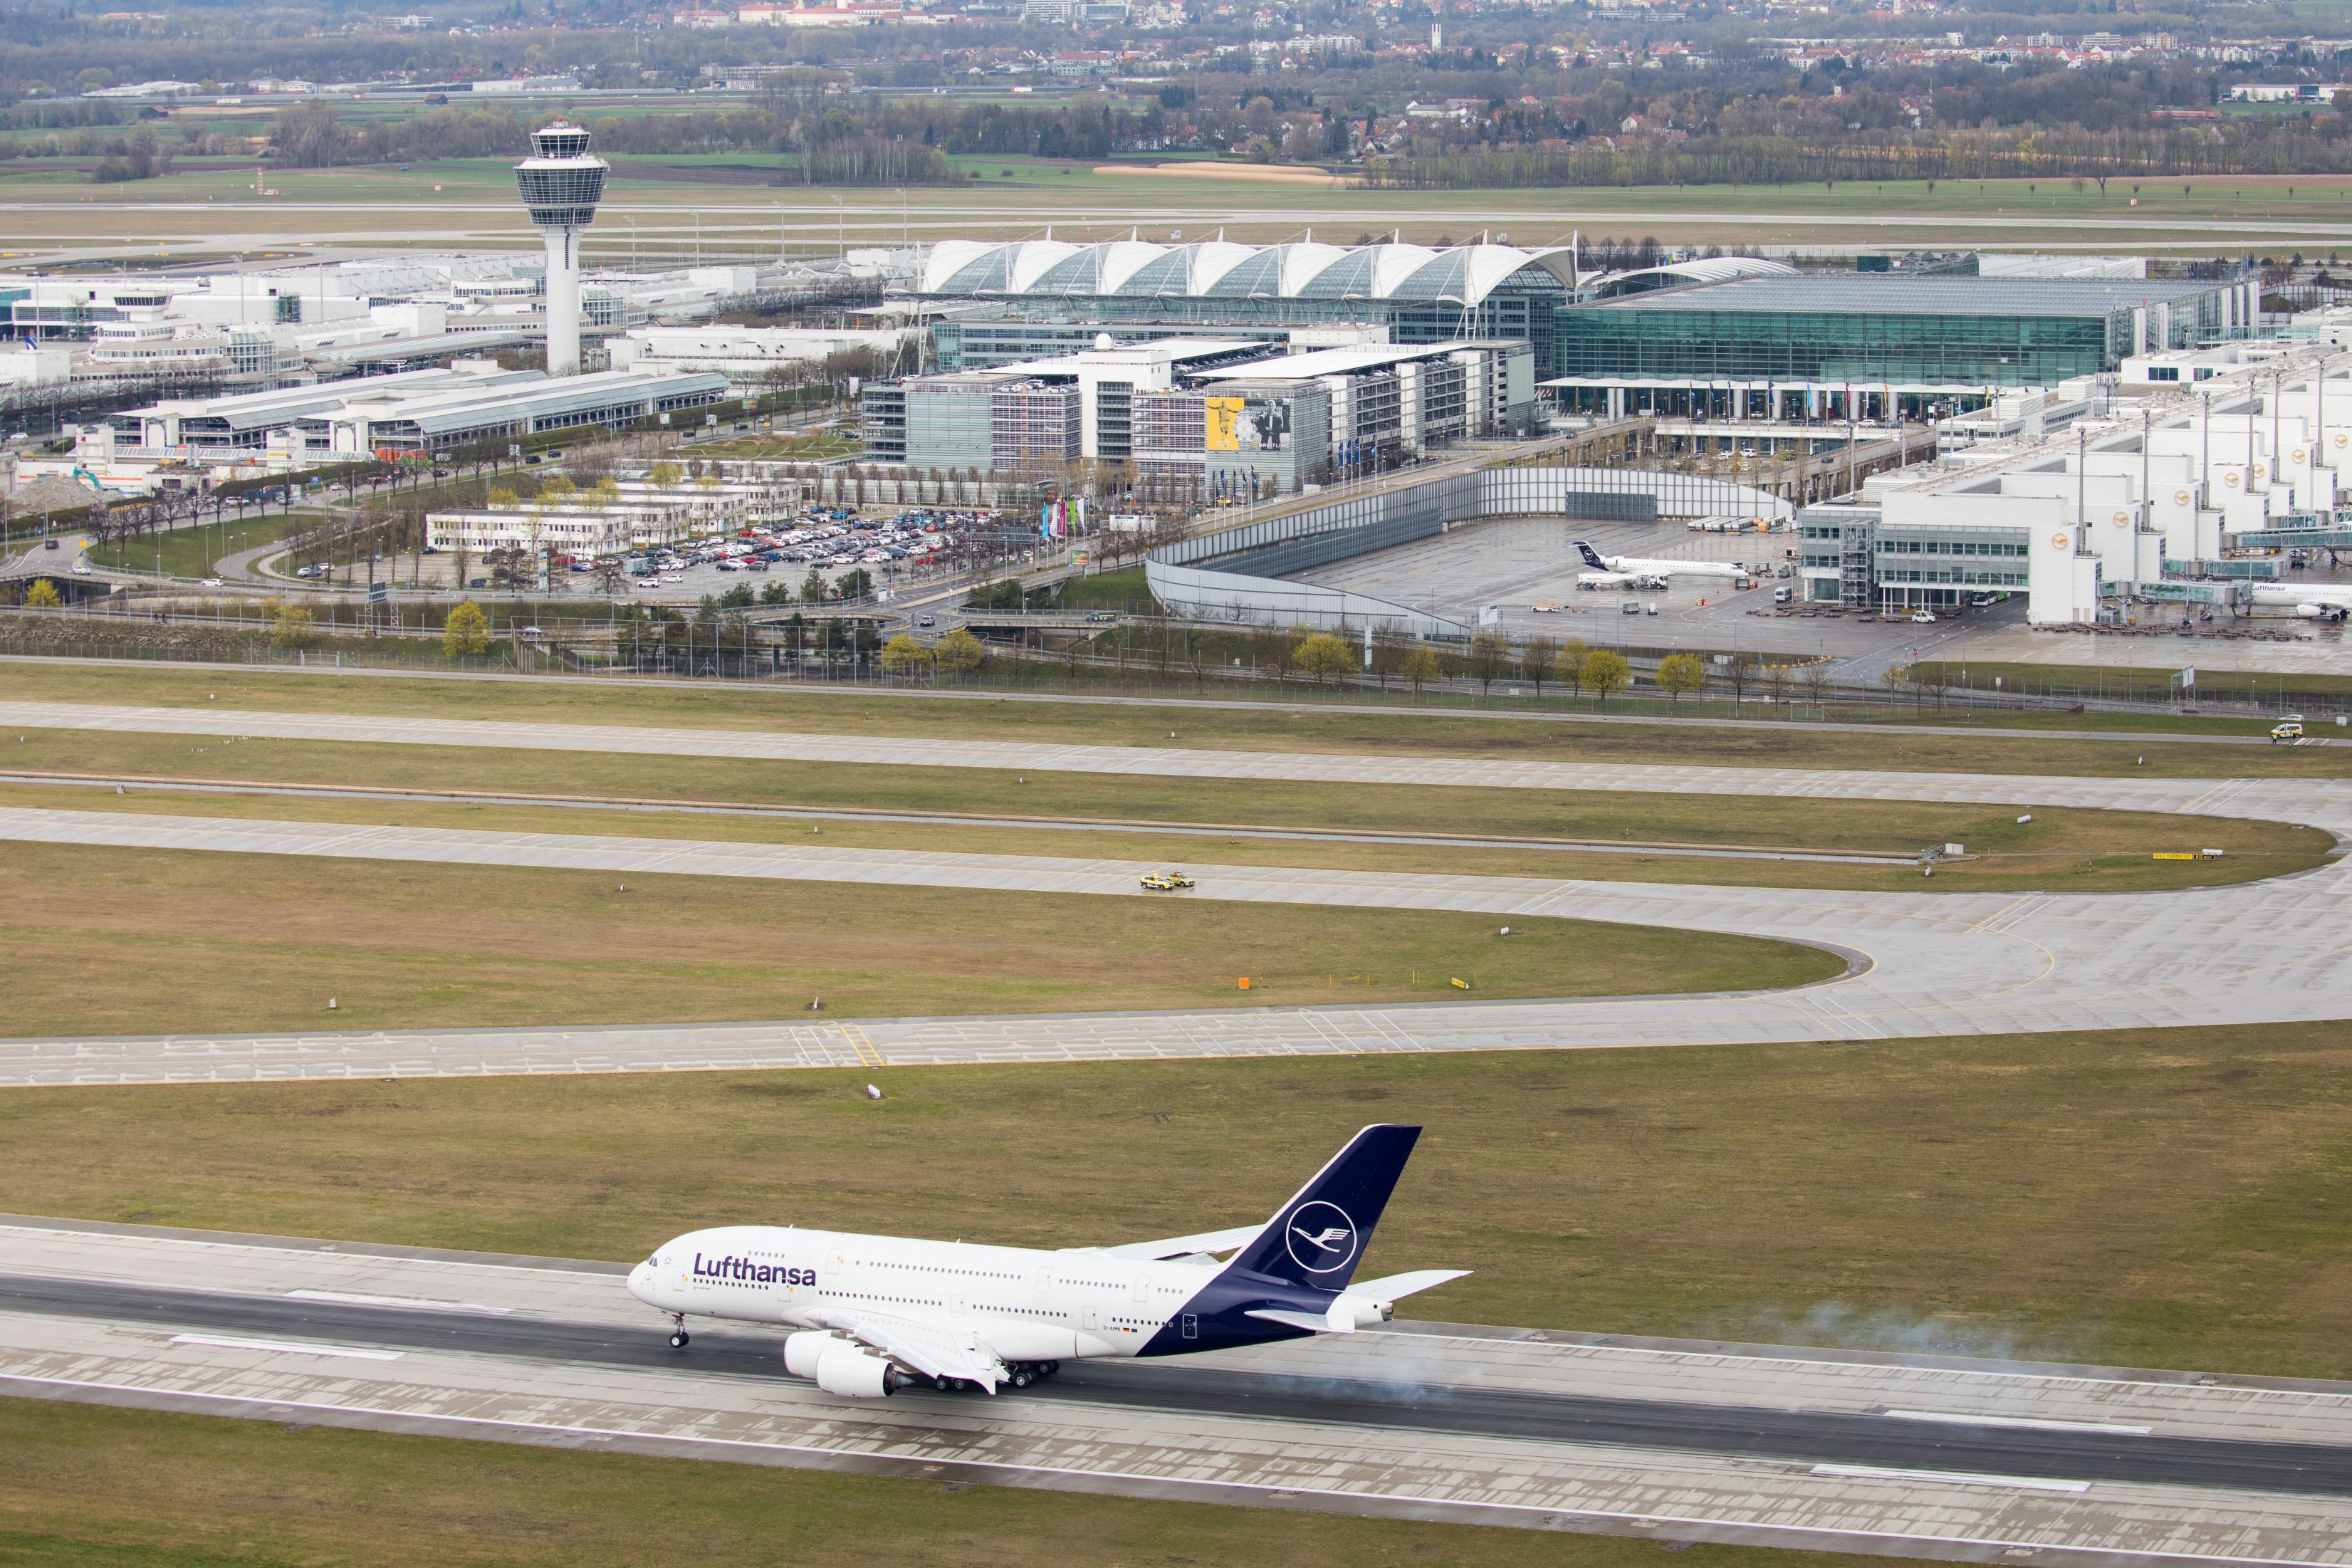 Lufthansa AIrbus A380 in Munich